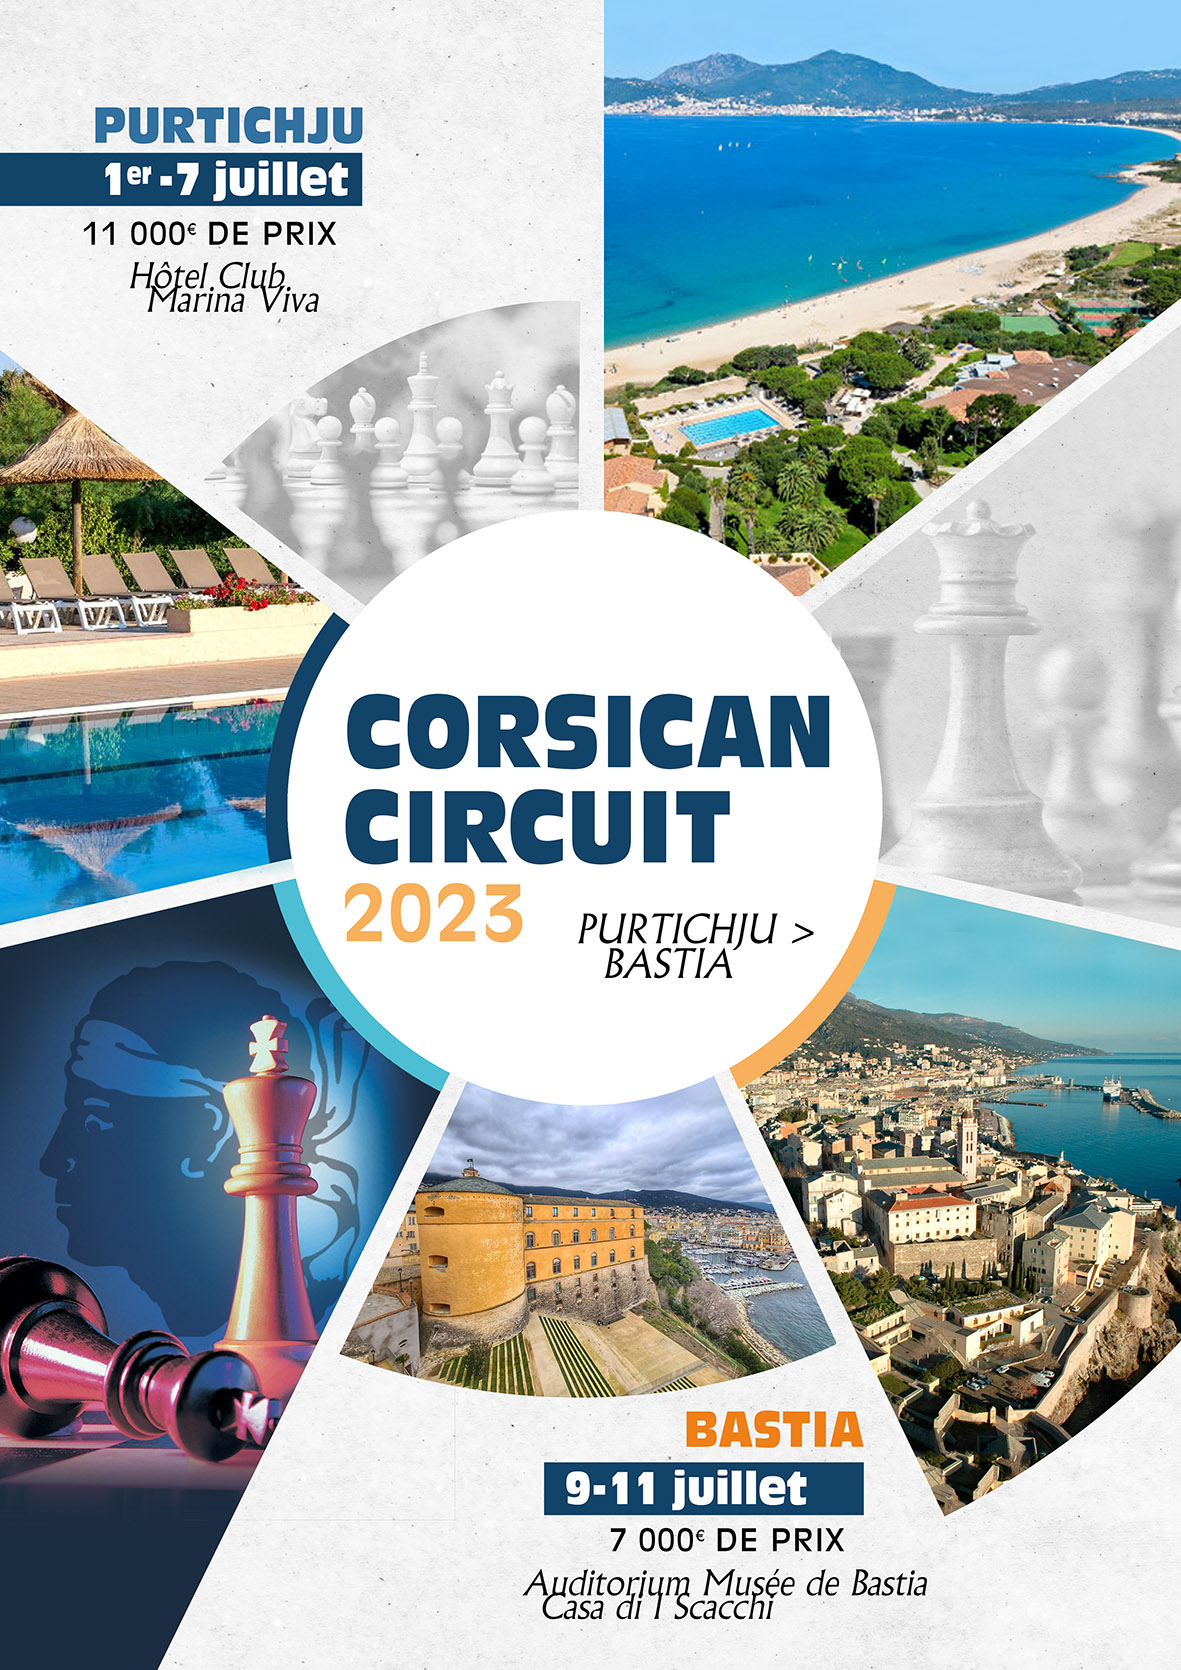 Corsican Circuit 2023 - Purtichju 1/7 juillet - Bastia 9/10 juillet